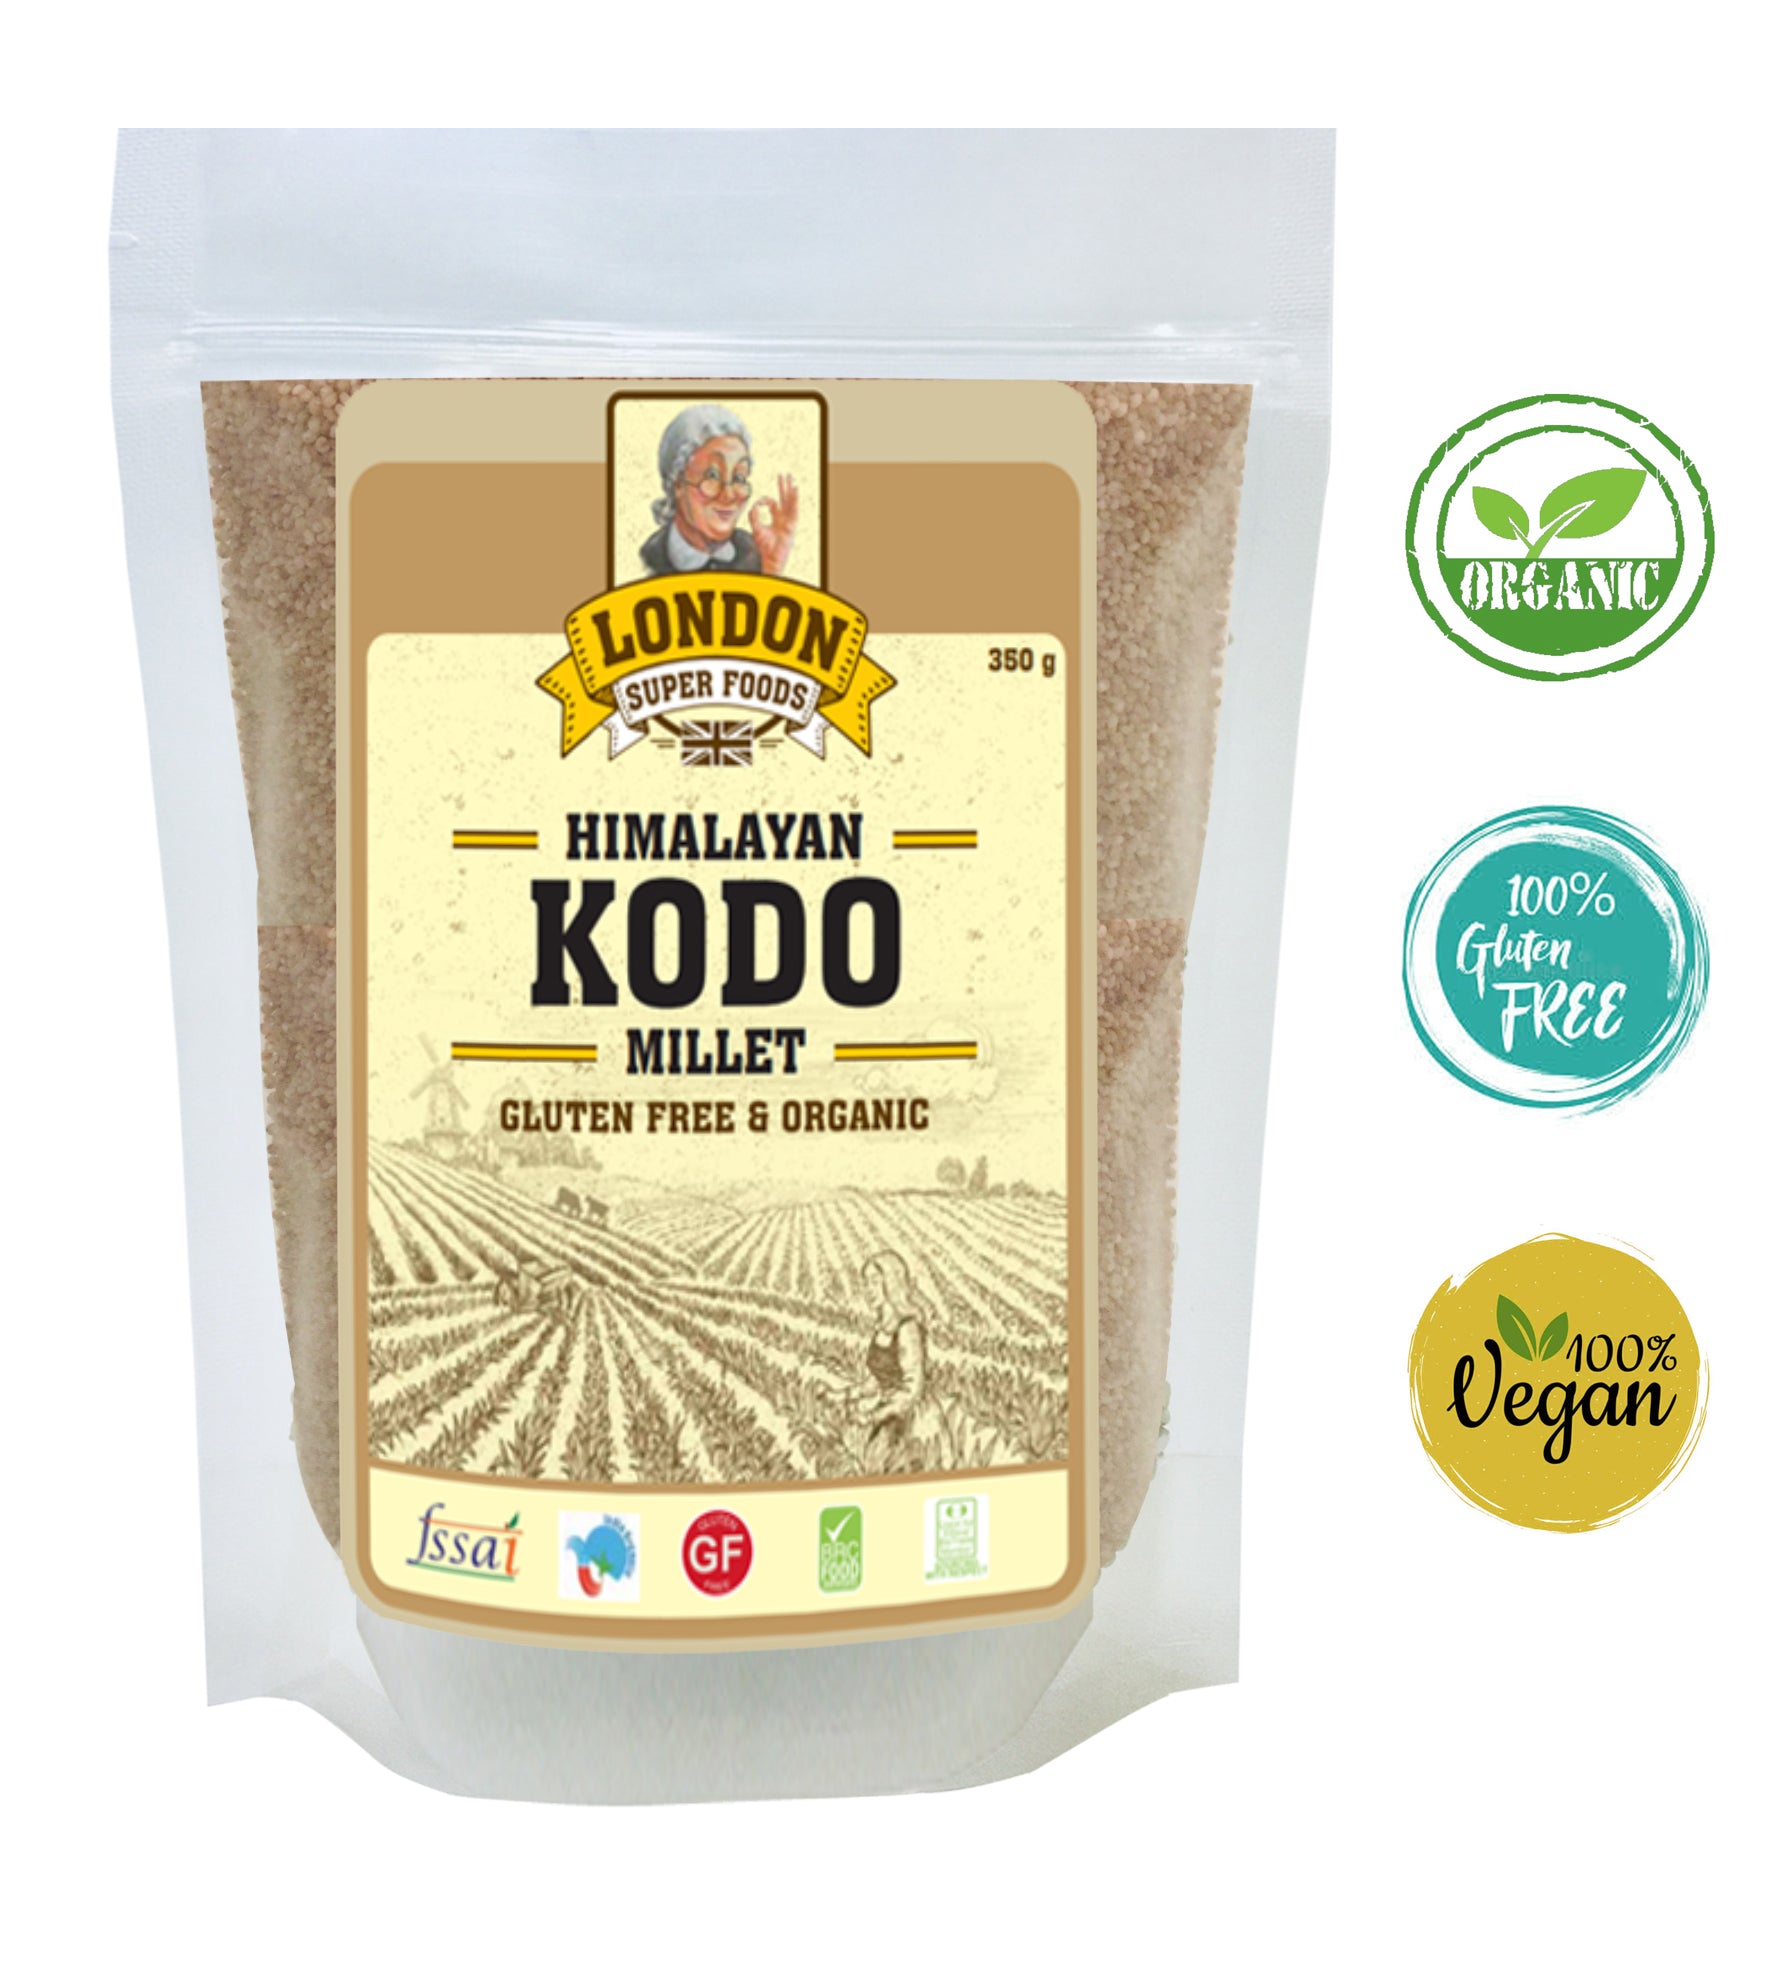 LONDON SUPER FOODS Himalayan Organic Kodo Millet, 350g - Gluten Free